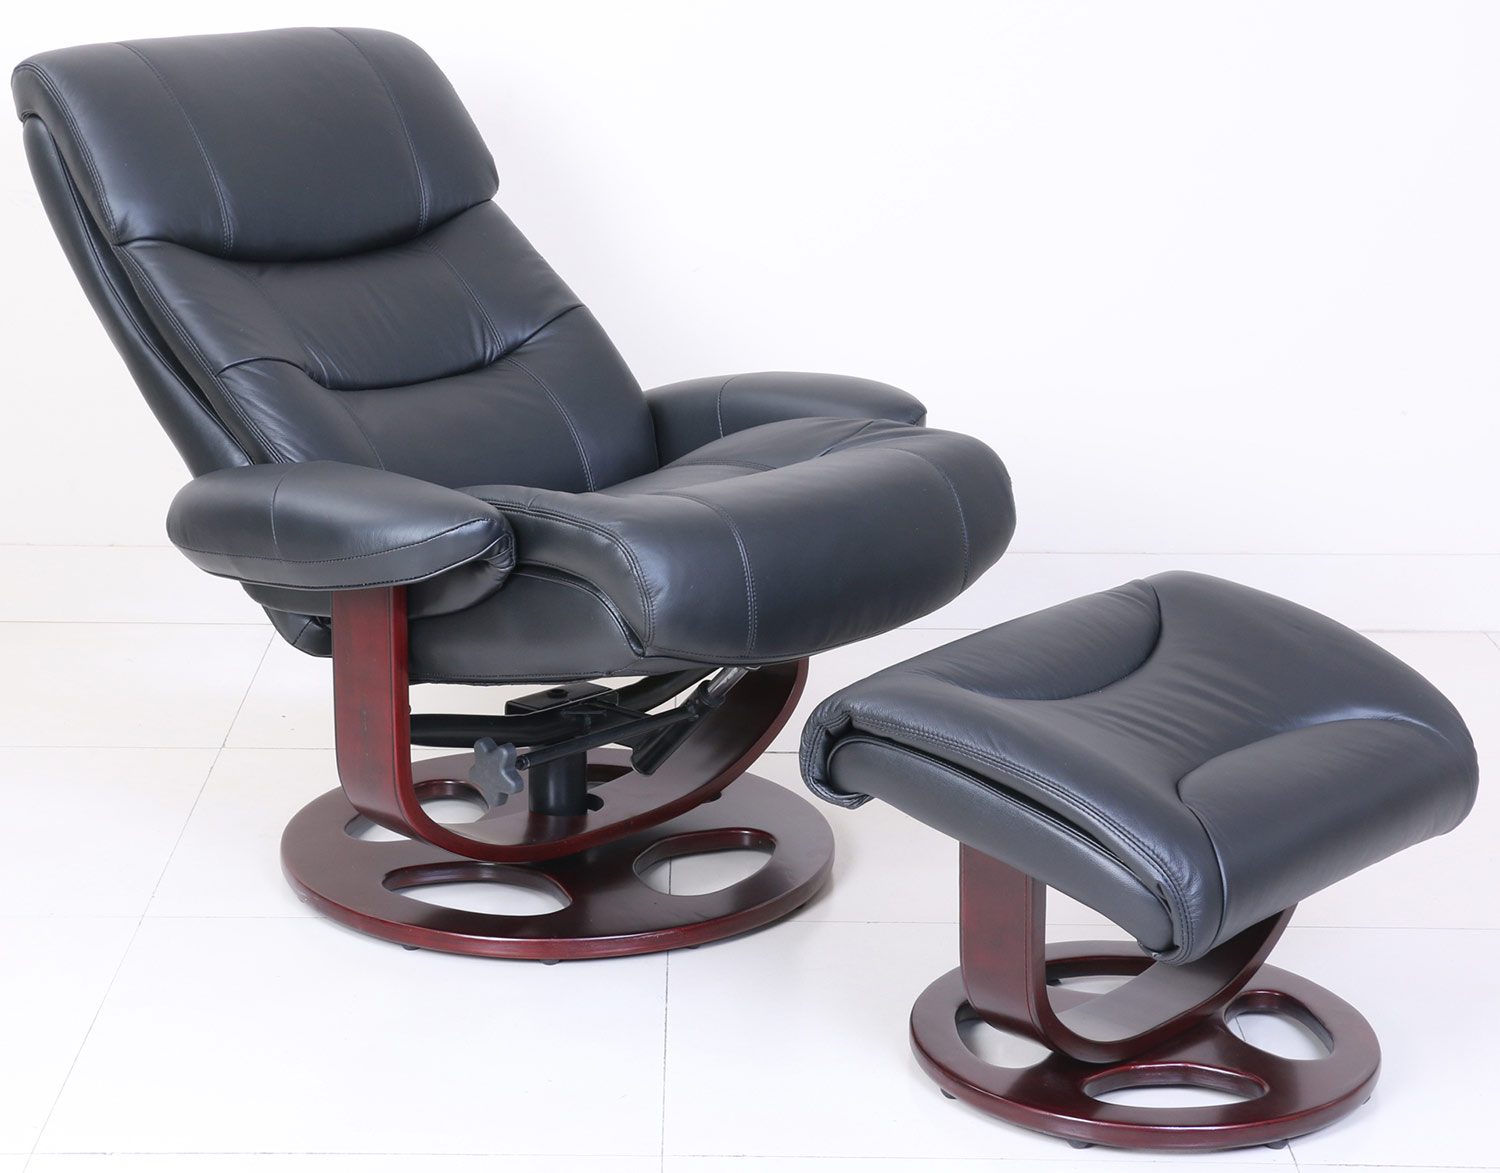 Barcalounger Dawson Pedestal Recliner Chair and Ottoman - Frampton Black/Leather Match